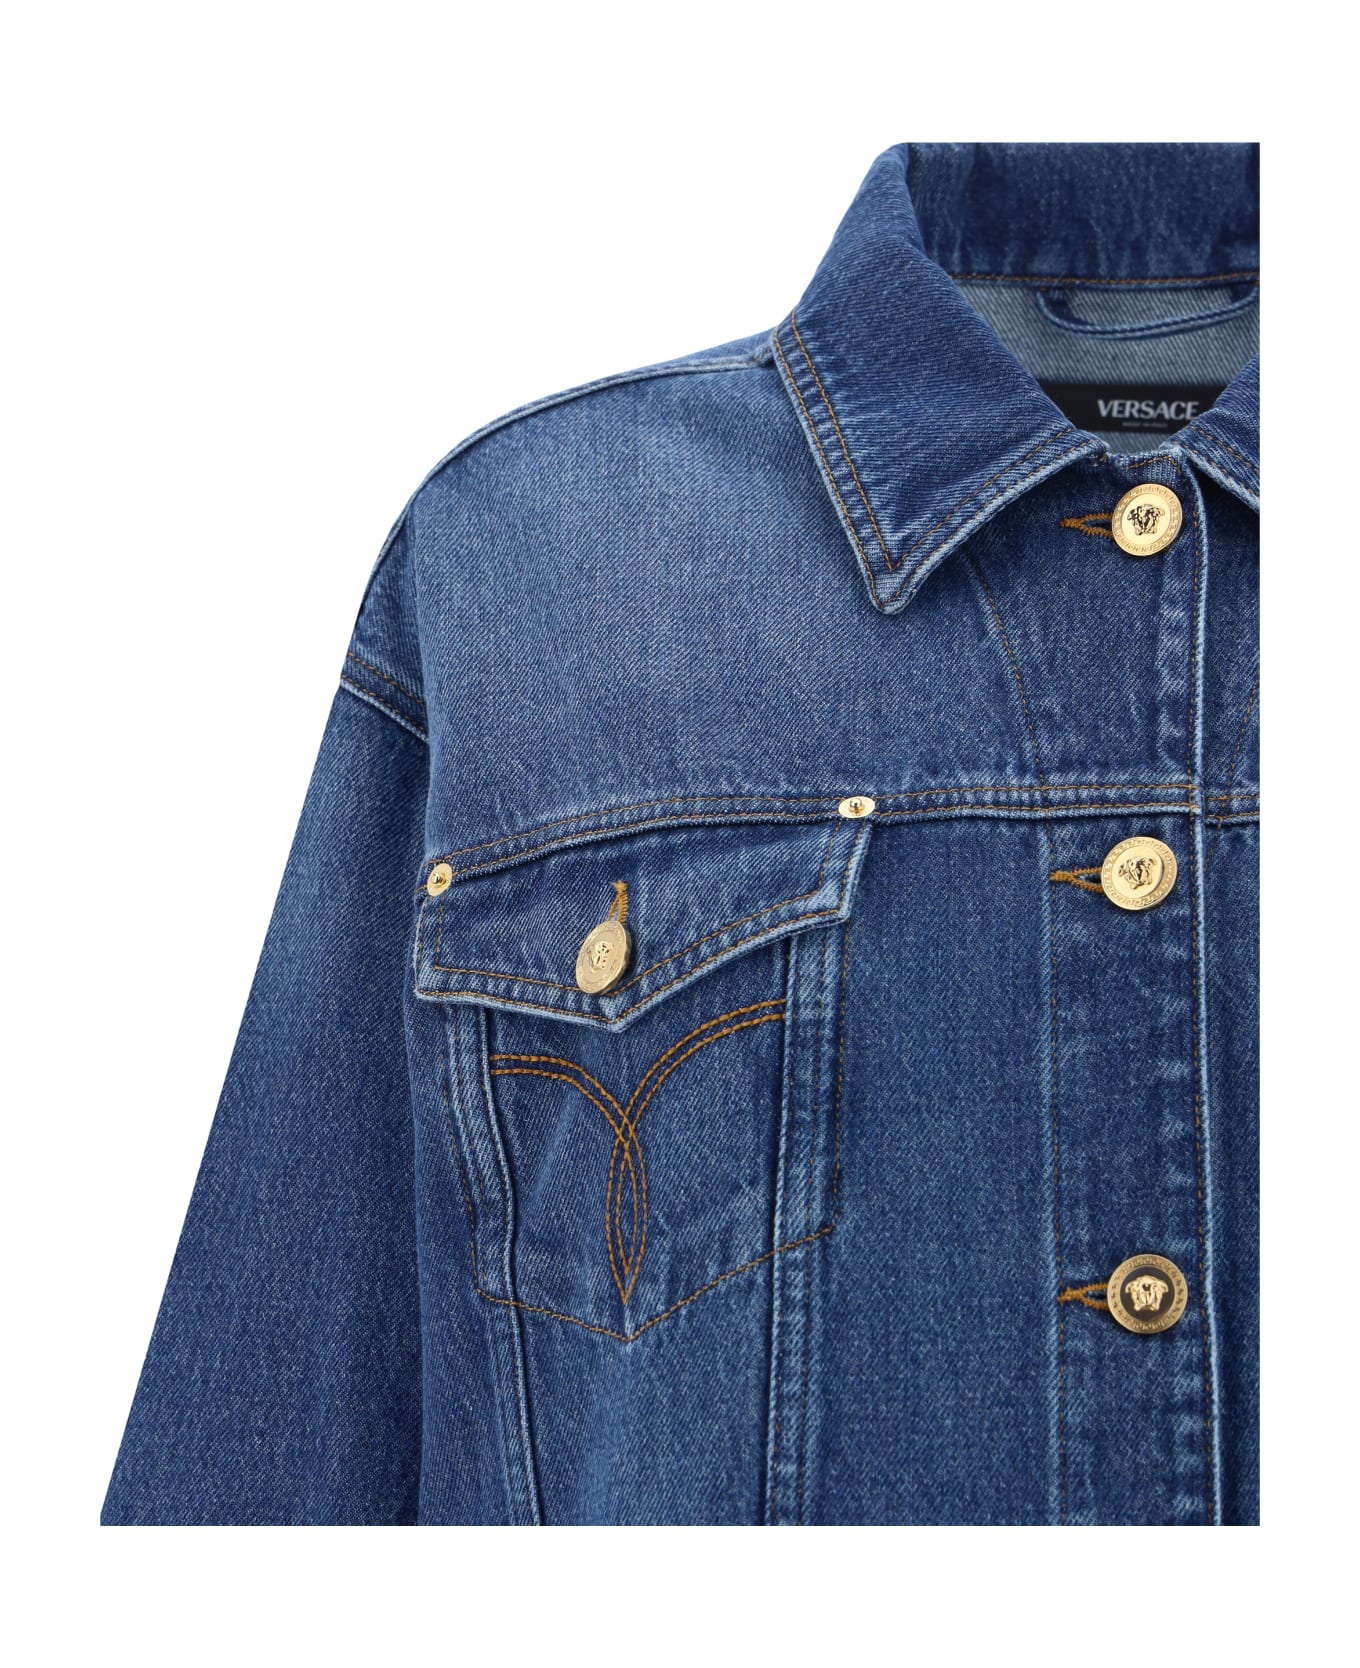 Versace Denim Jacket - Medium Blue ジャケット